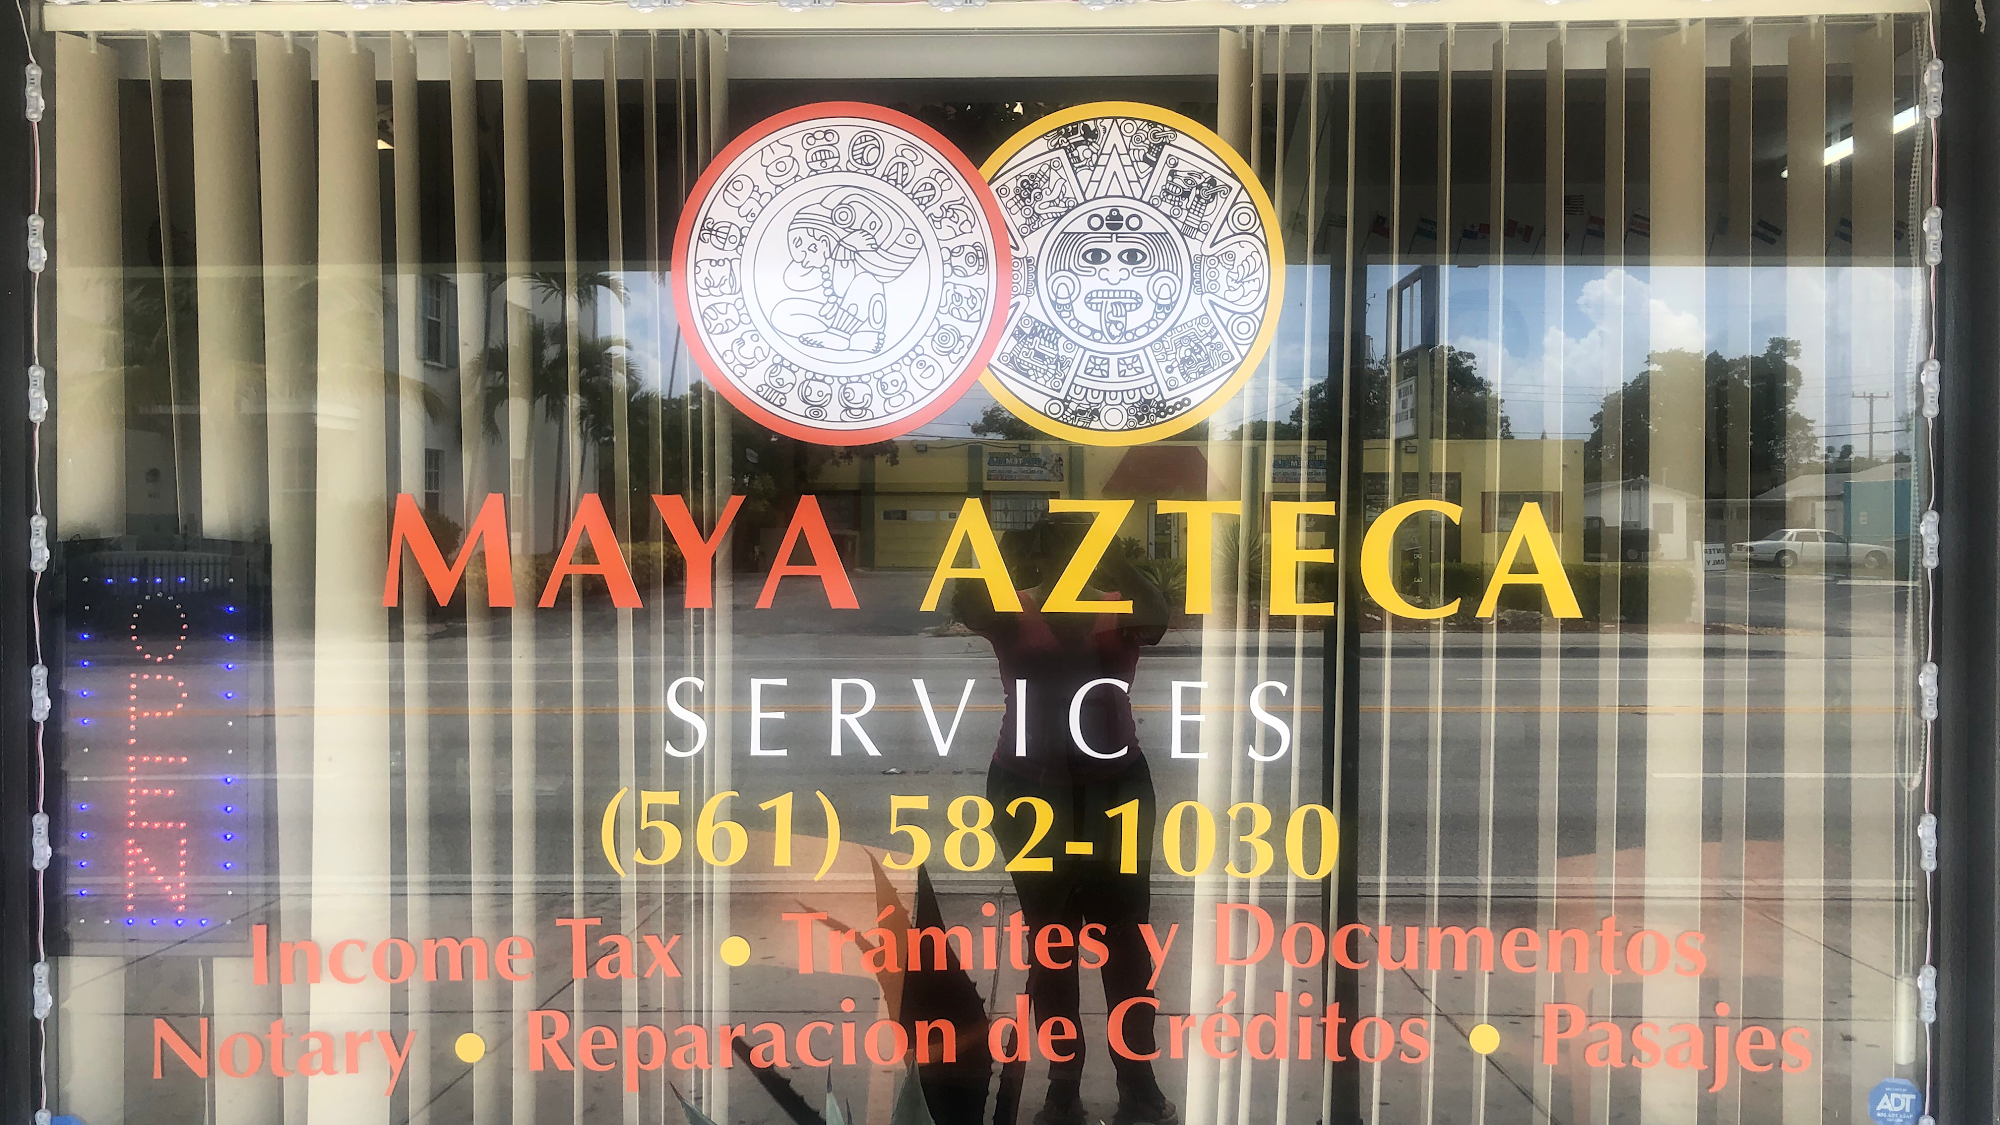 Maya Azteca Services